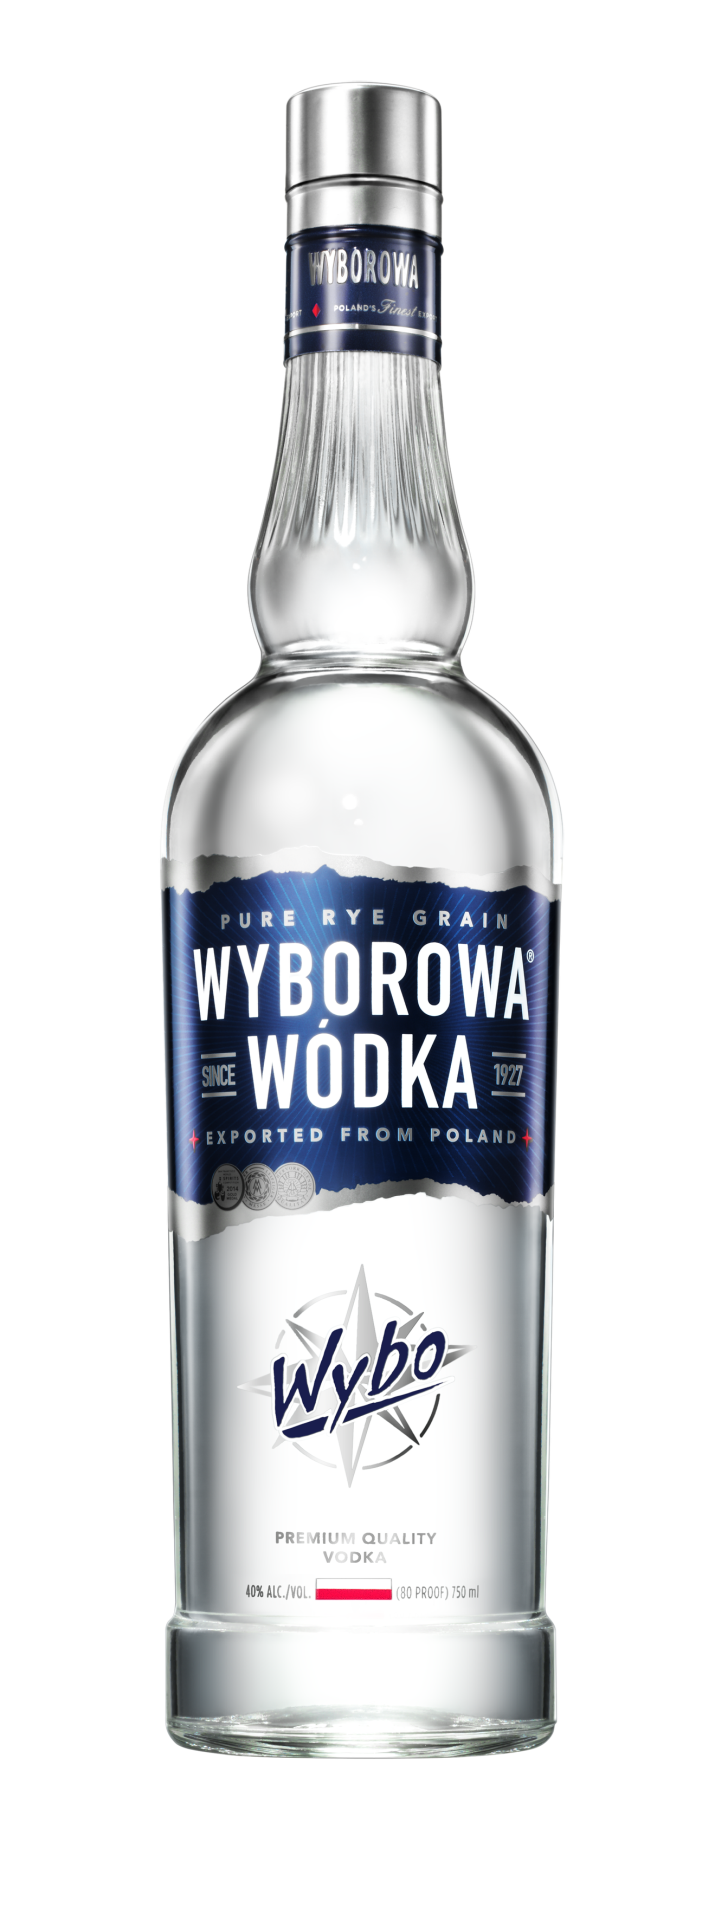 Wyborowa Vodka Launches in the U.S. Under Leadership of Michel Roux